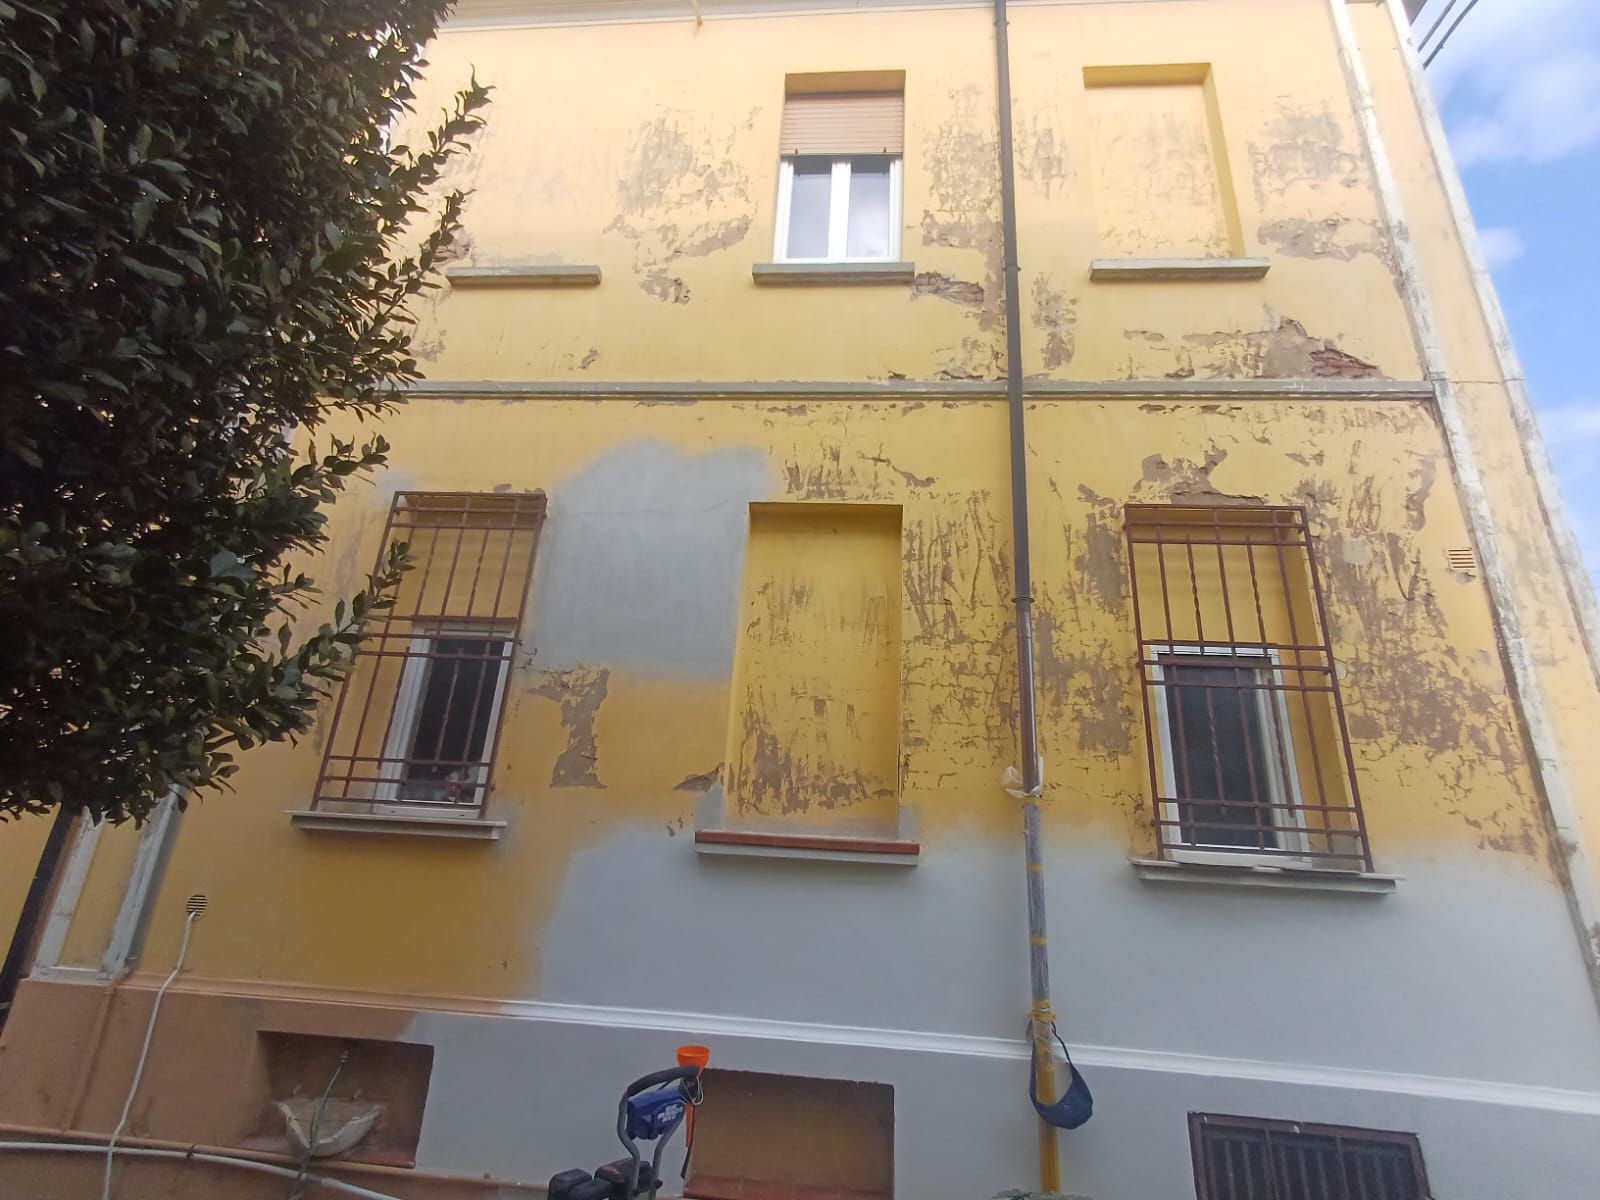 Tinteggiatura edile SUPERMAXCOLOR Pittore edile a Faenza